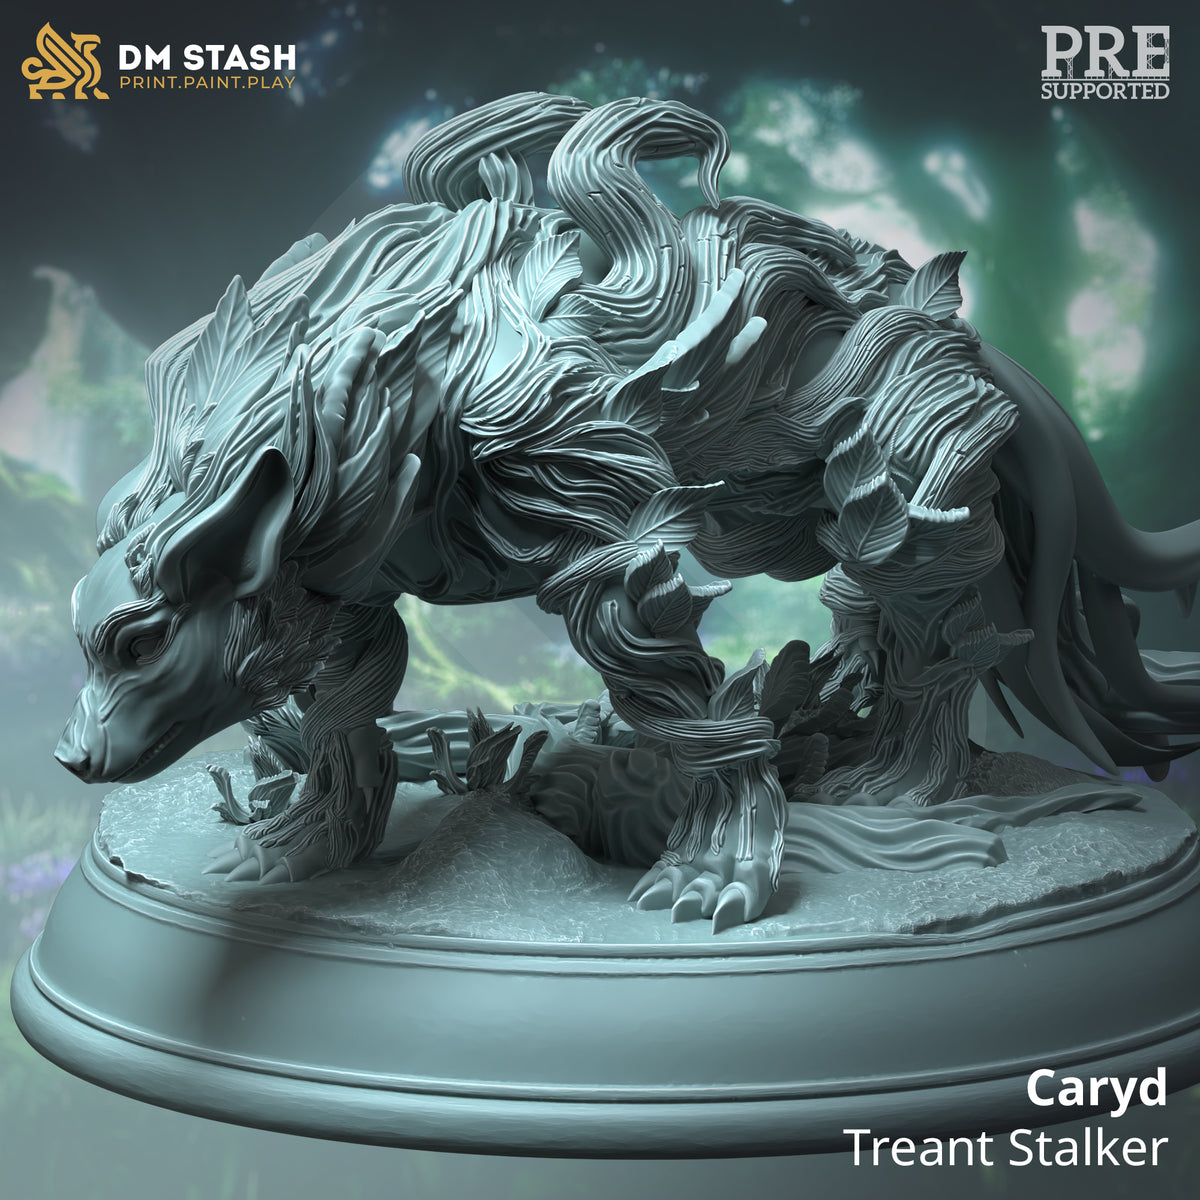 Caryd - Treant Stalker